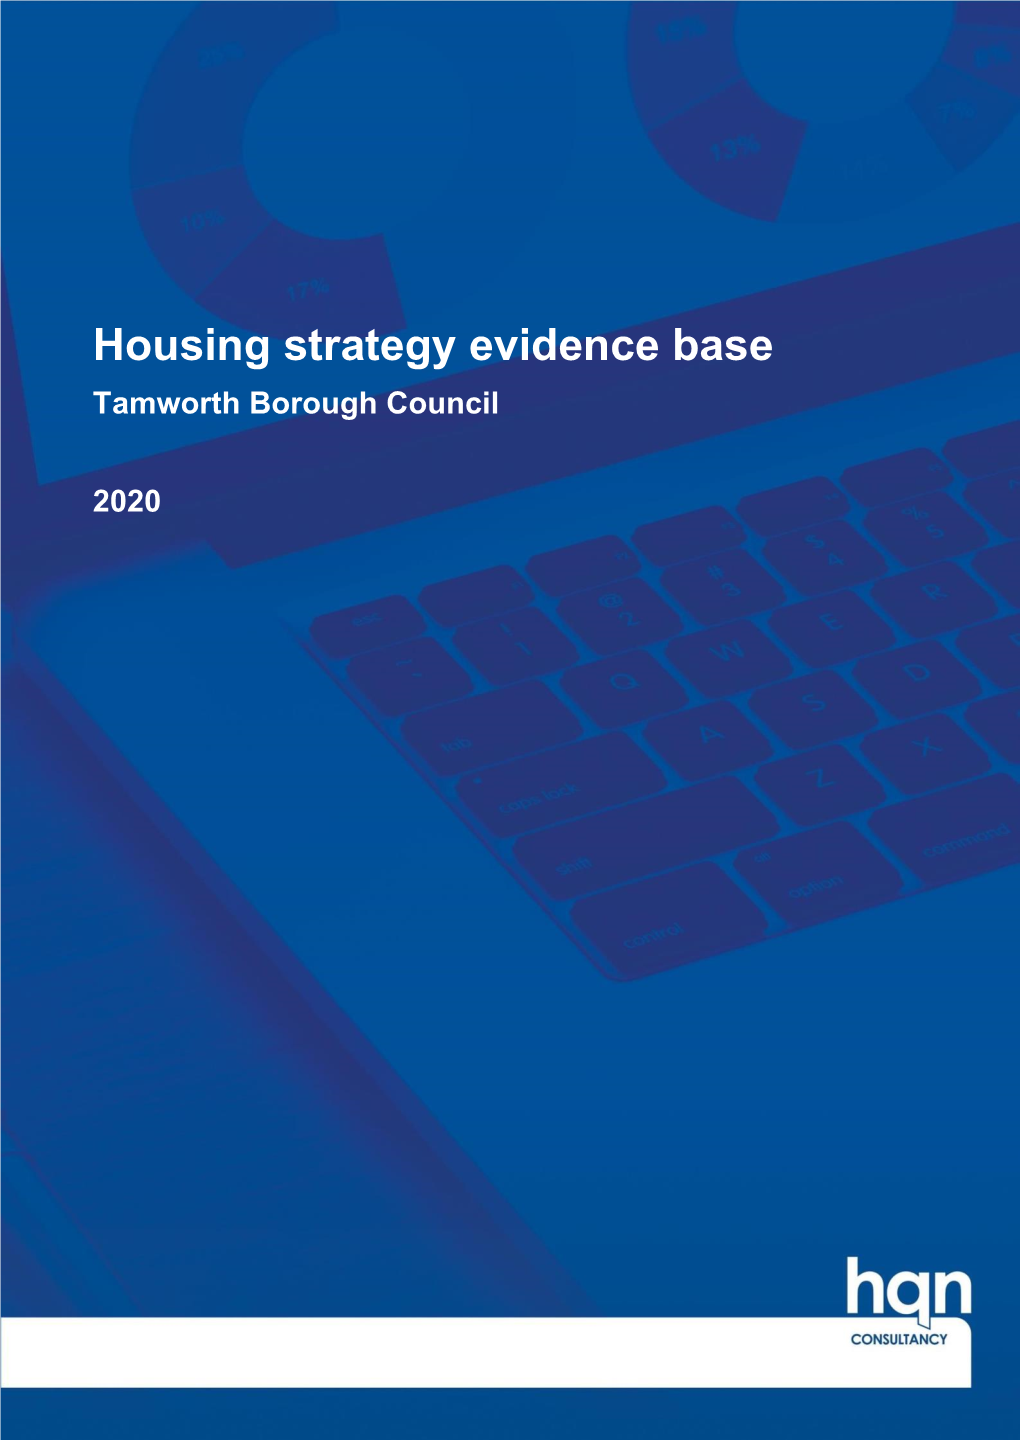 Housing Strategy Evidence Base